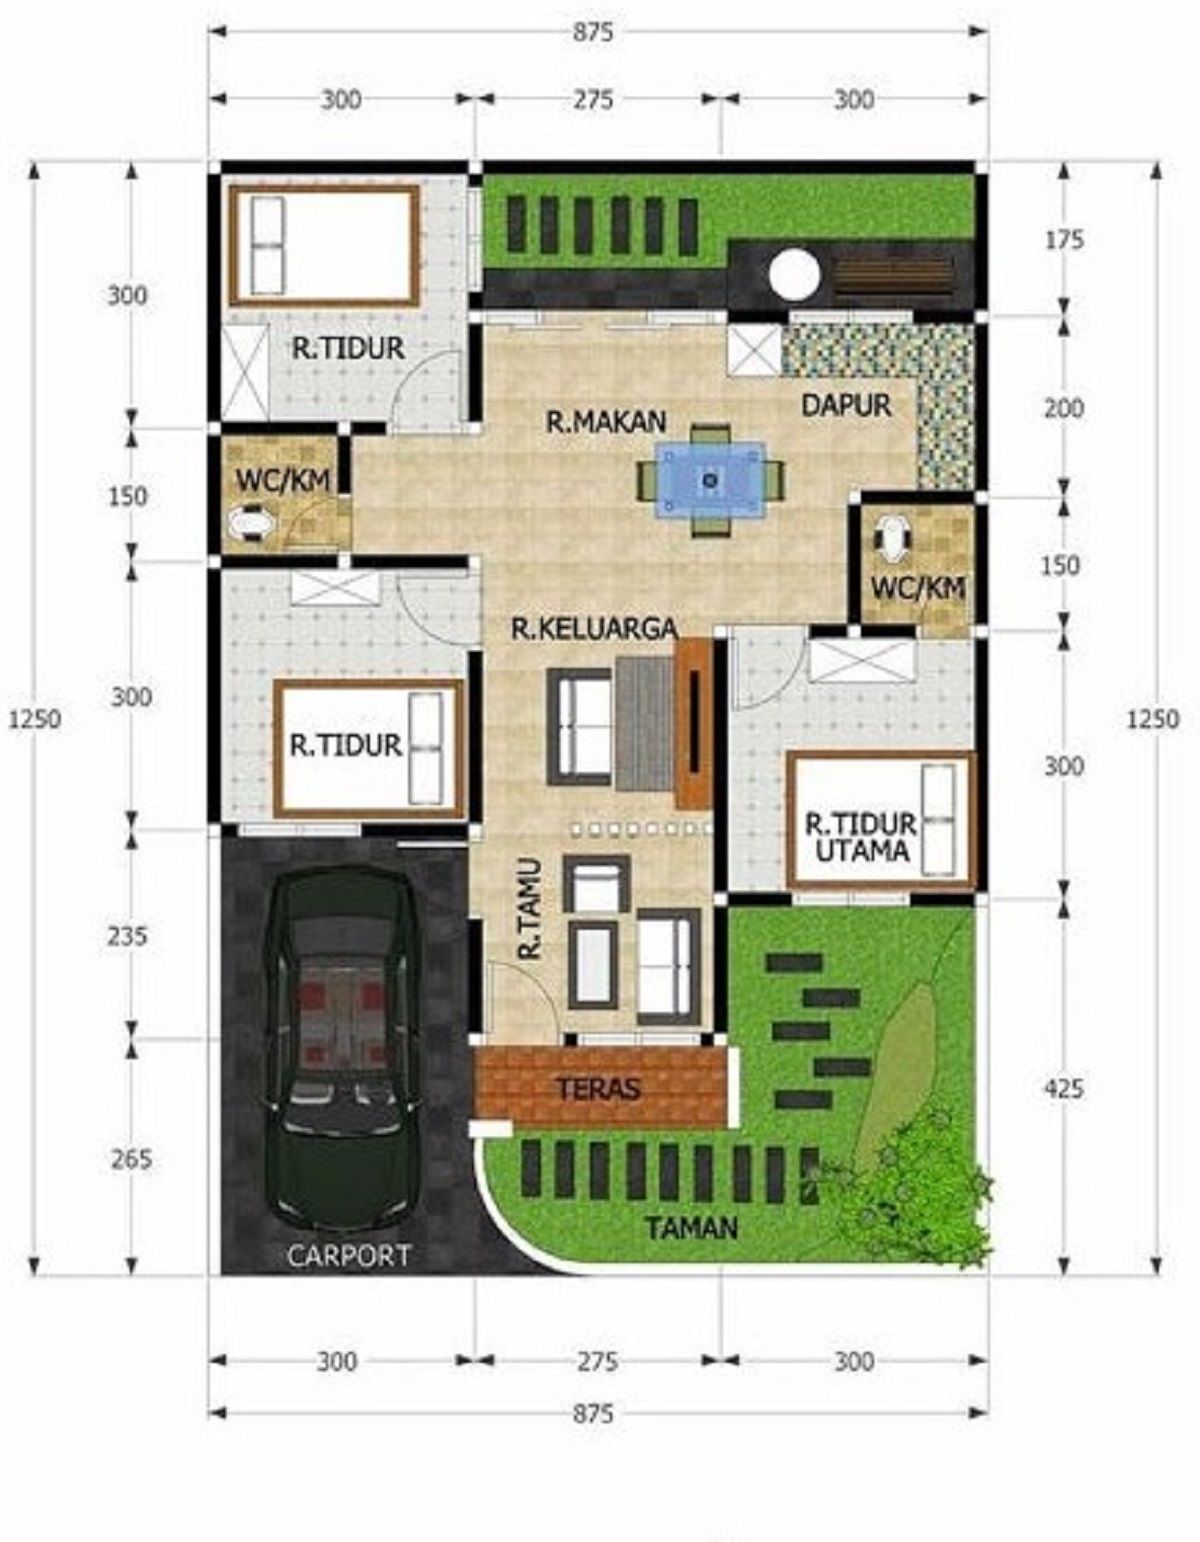 Desain Rumah Minimalis 3 Kamar Modern/mitra10